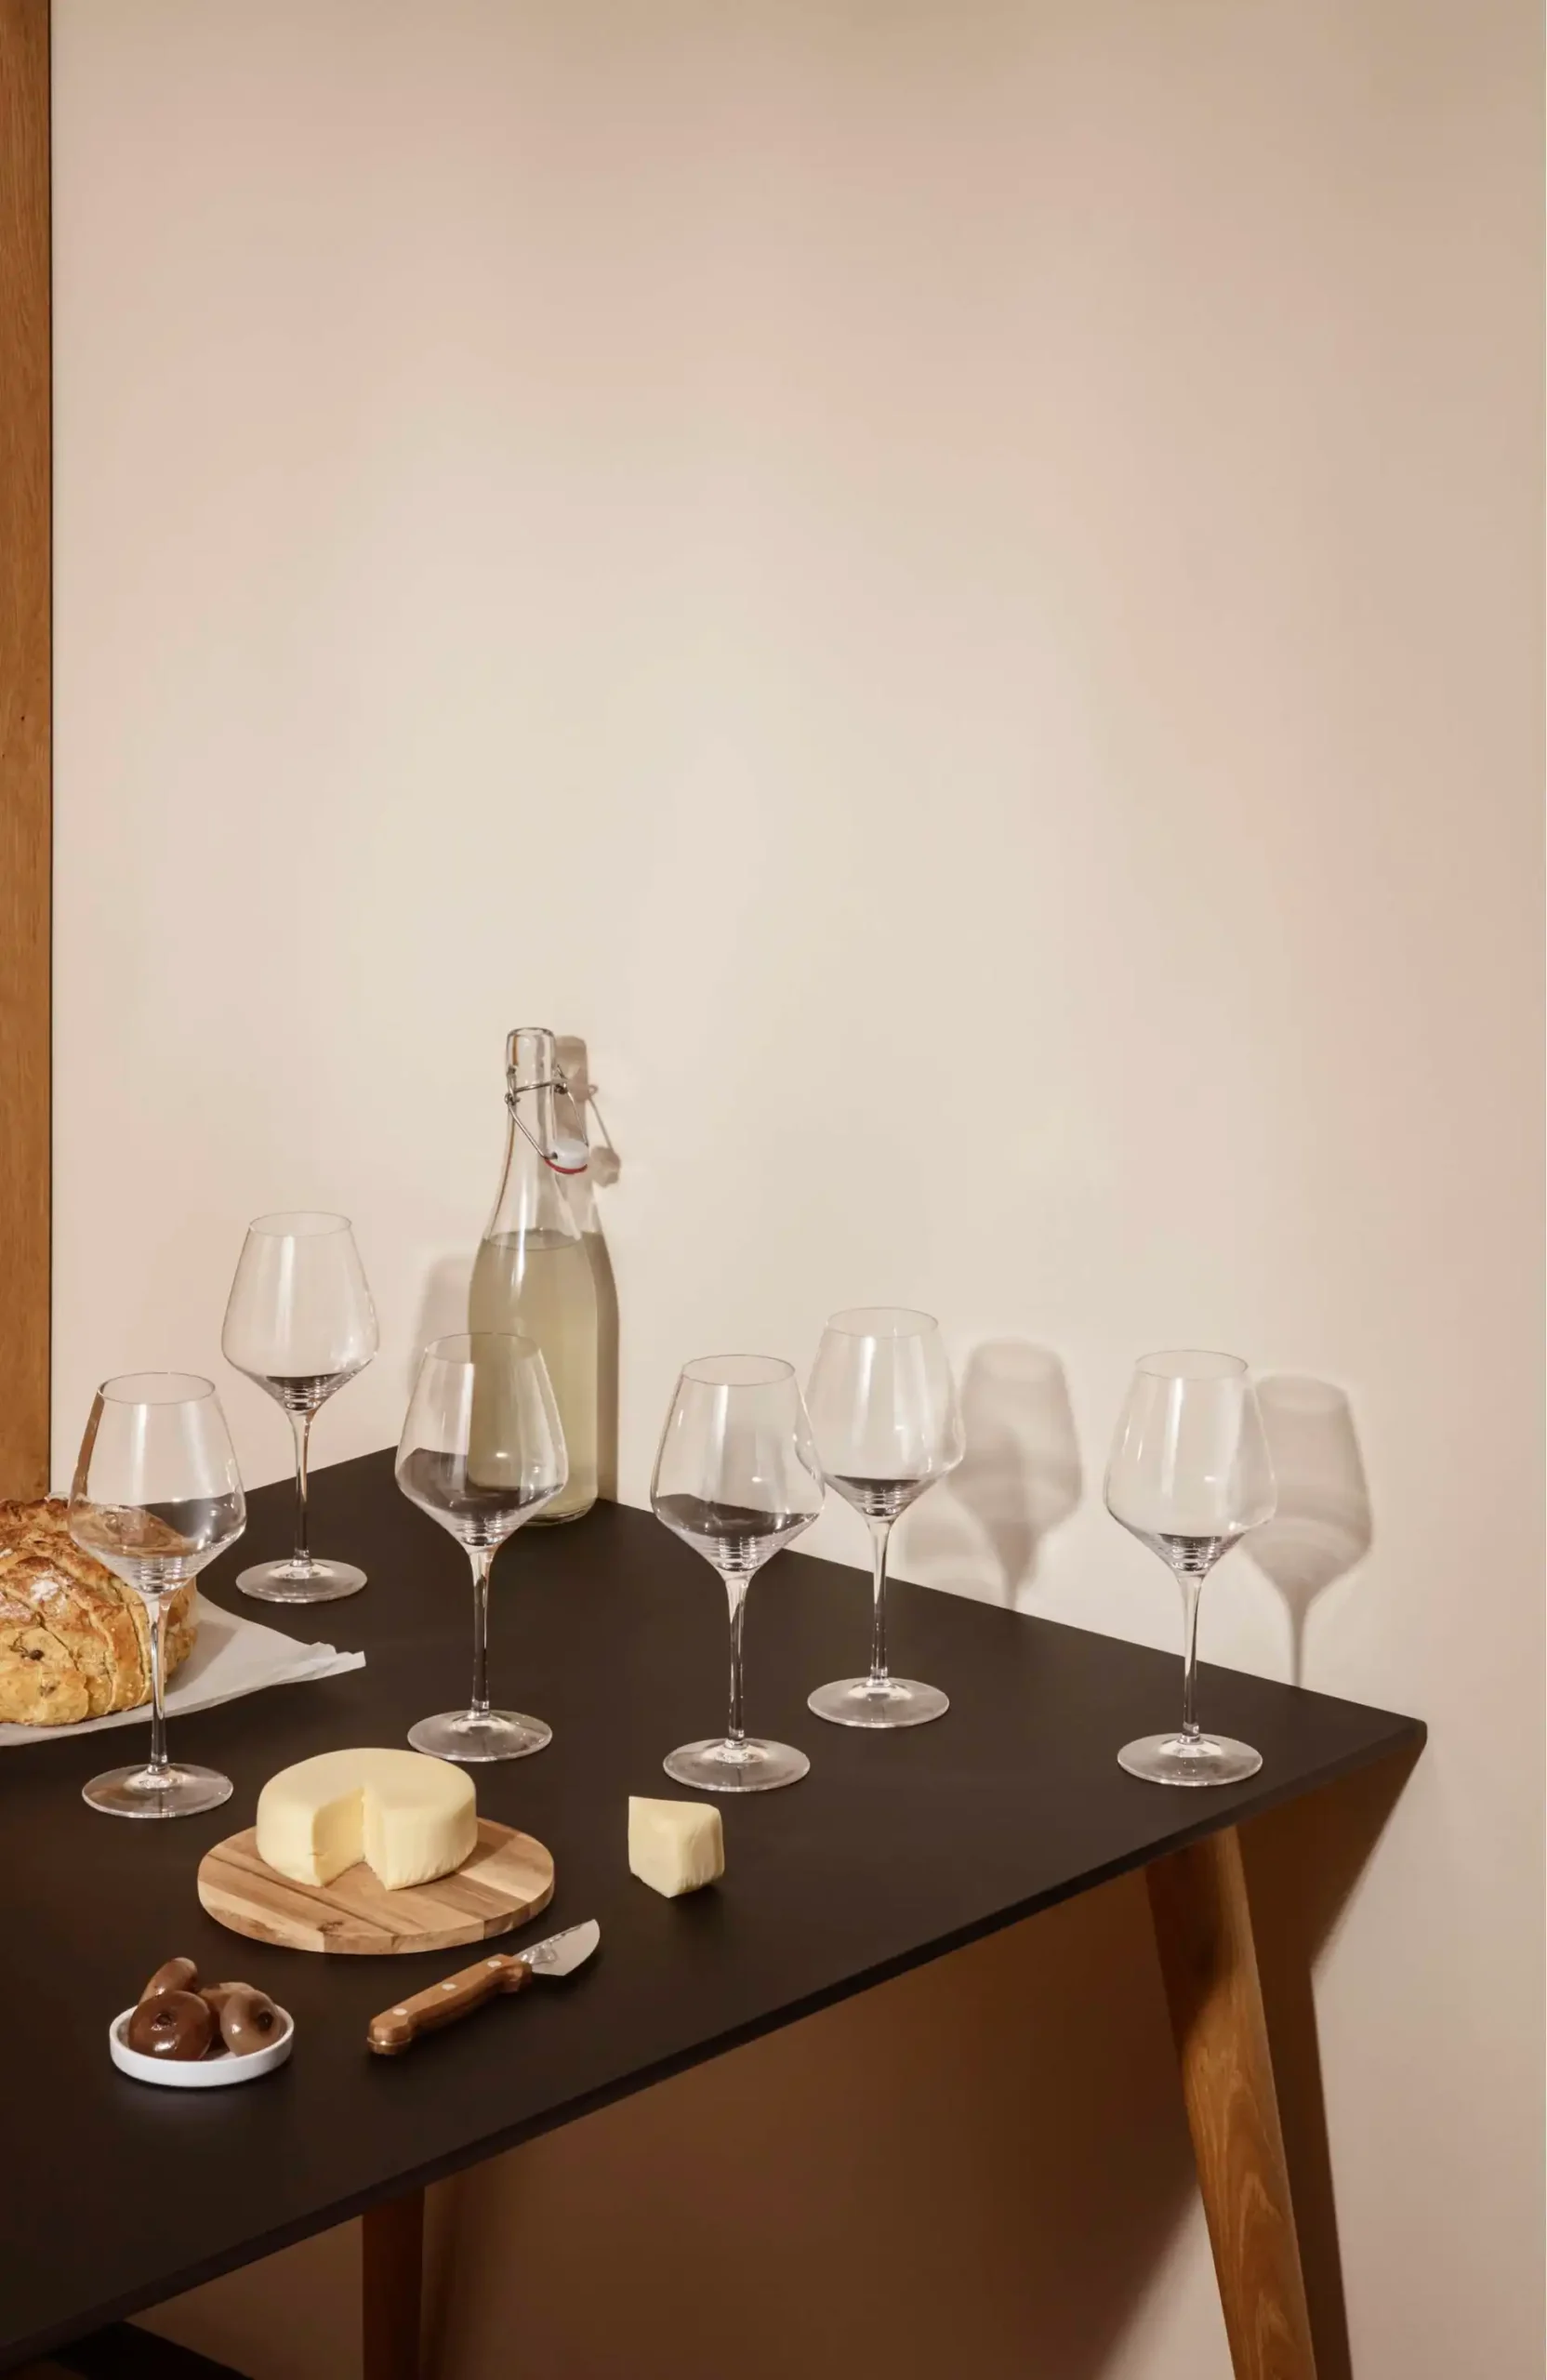 541201-legio-nova-wine-glasses-redwine-table-noalc-p.webp